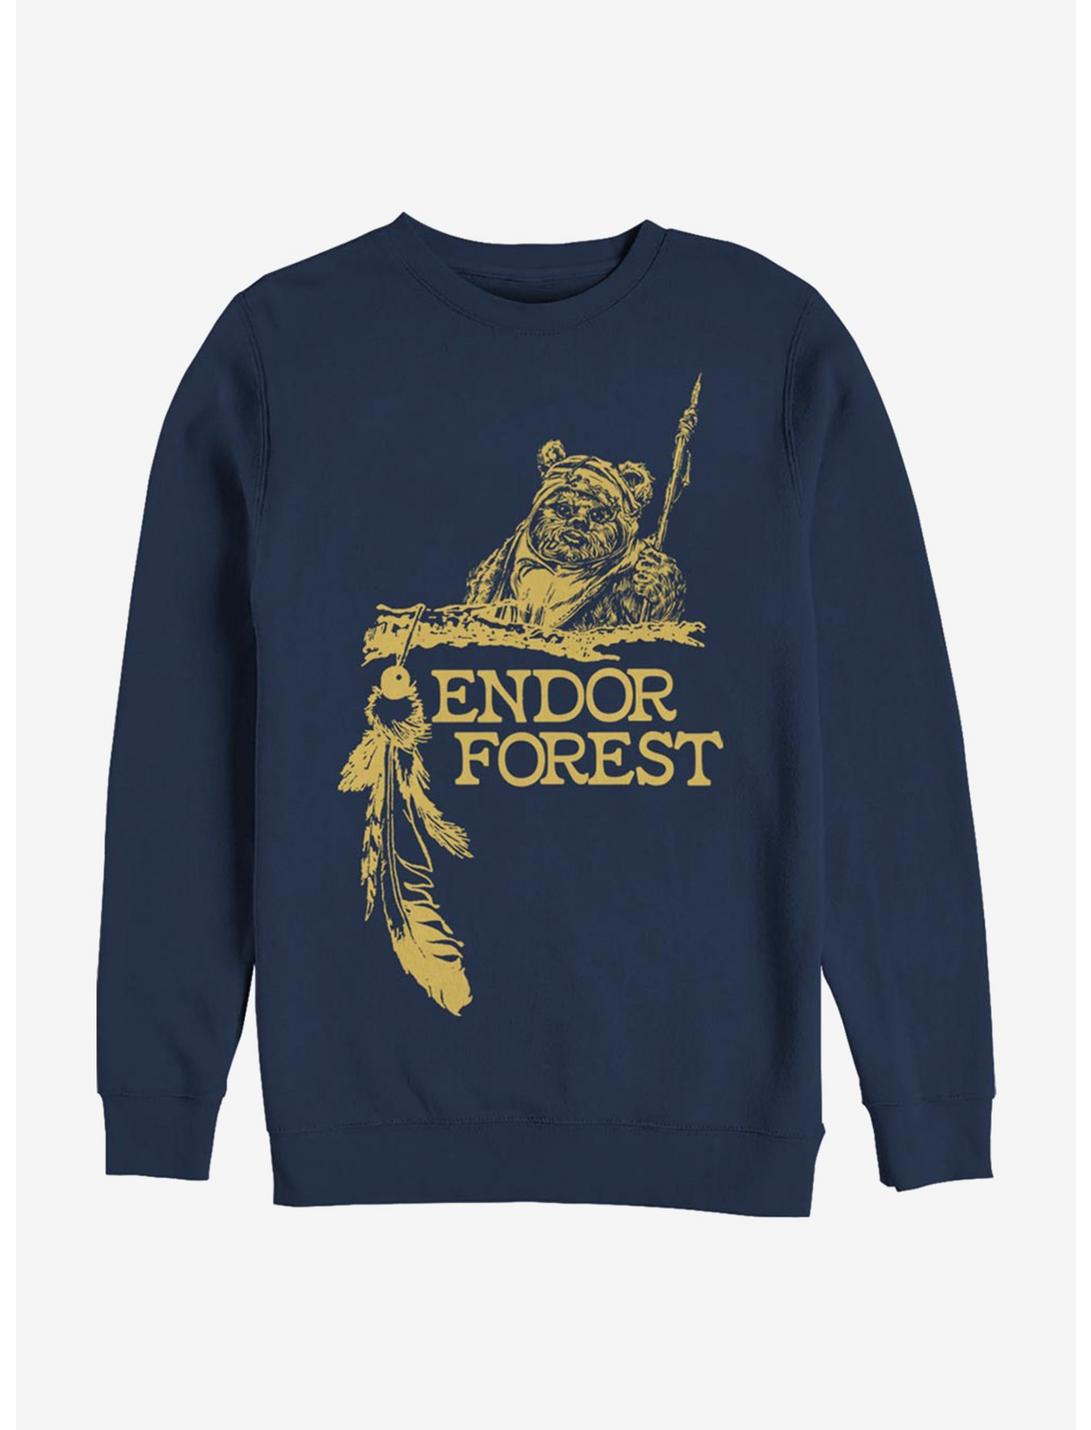 Star Wars Endor Forest Sweatshirt, NAVY, hi-res